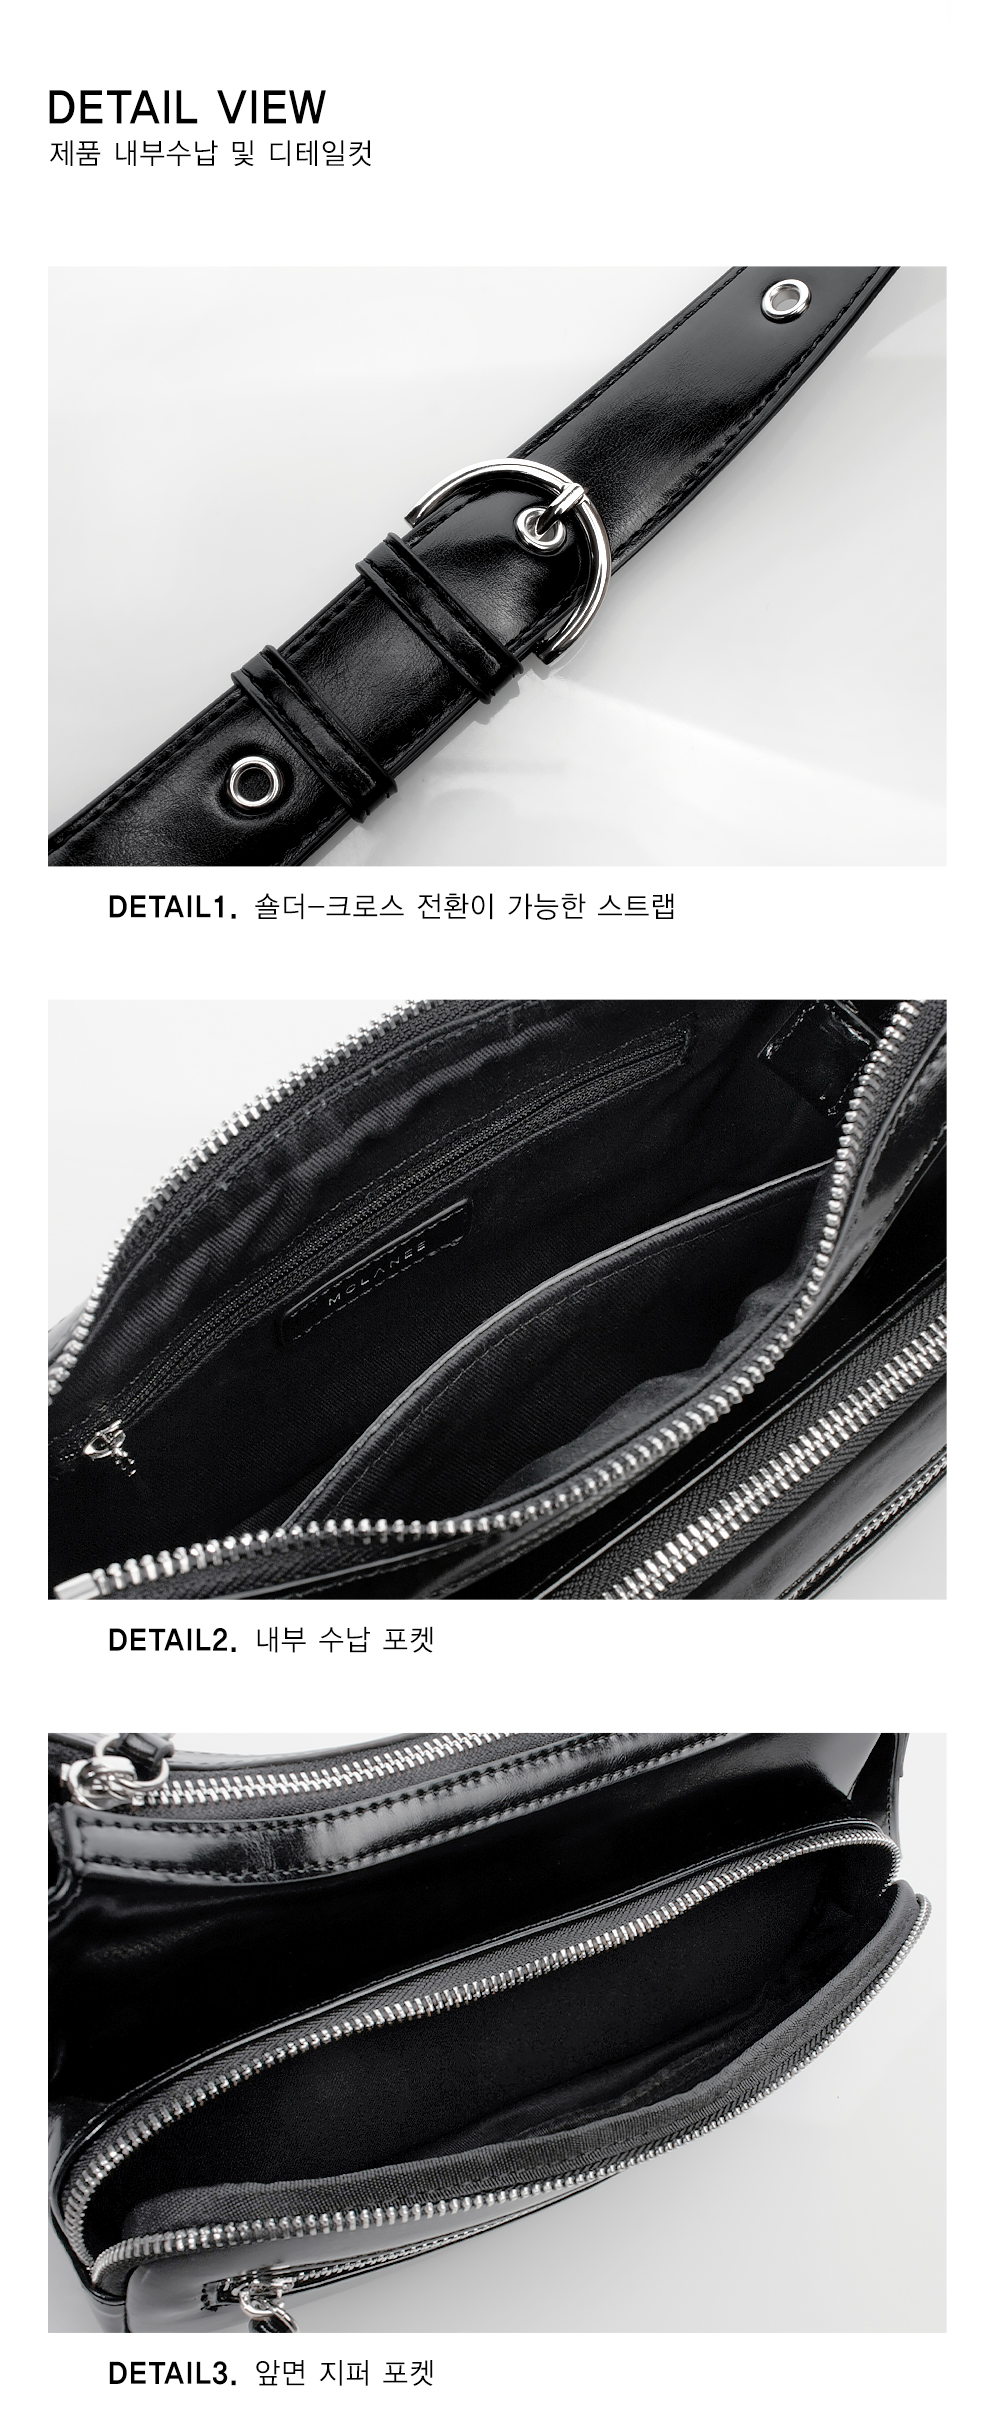 [MCLANEE] Kina shoulder and cross bag - Black